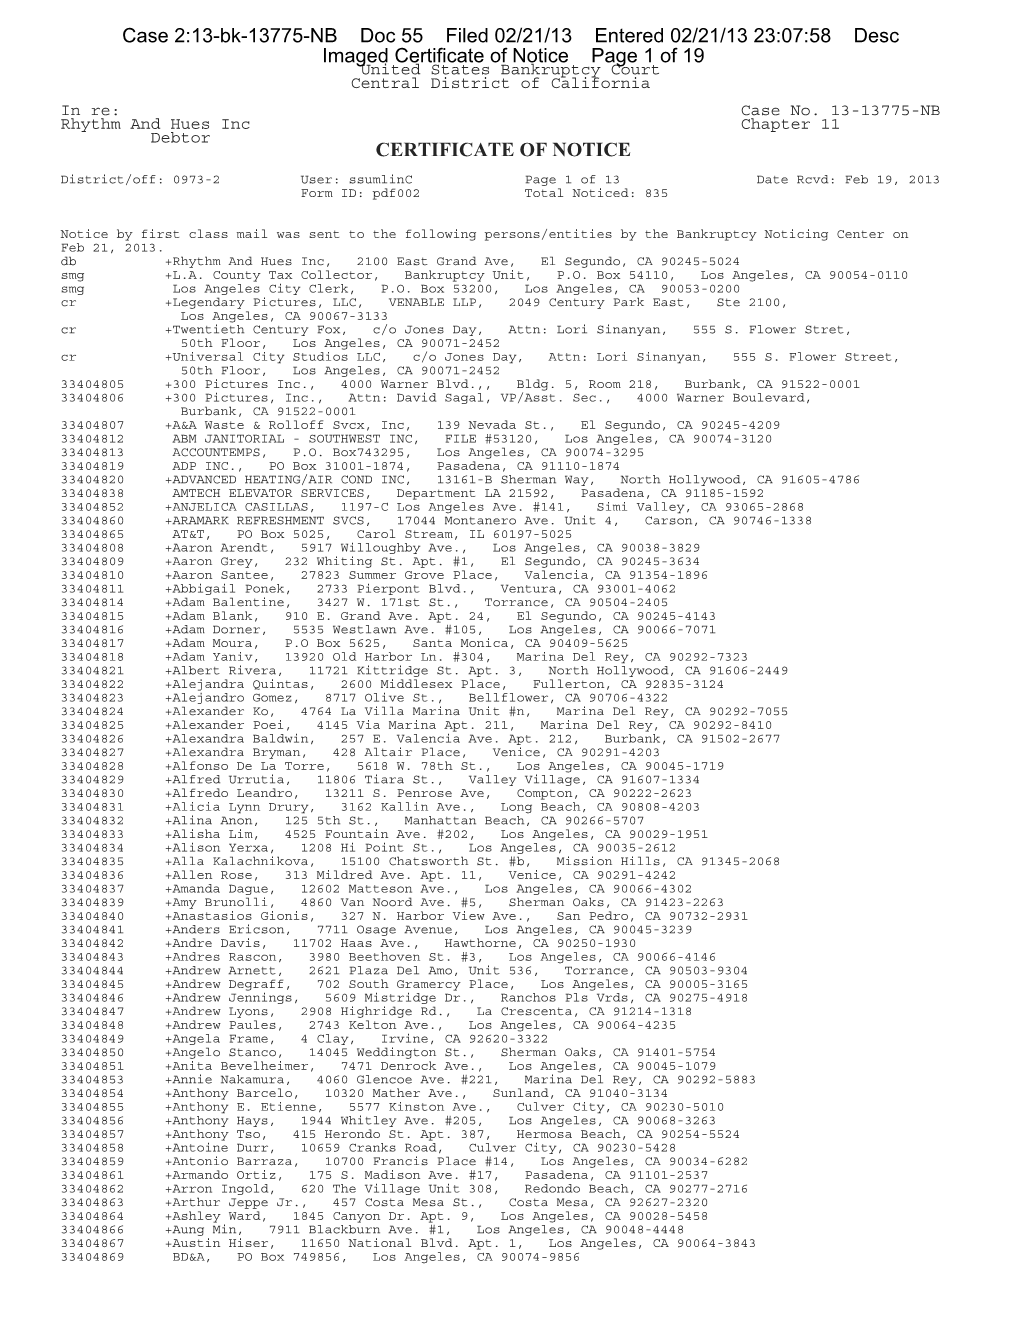 CERTIFICATE of NOTICE Case 2:13-Bk-13775-NB Doc 55 Filed 02